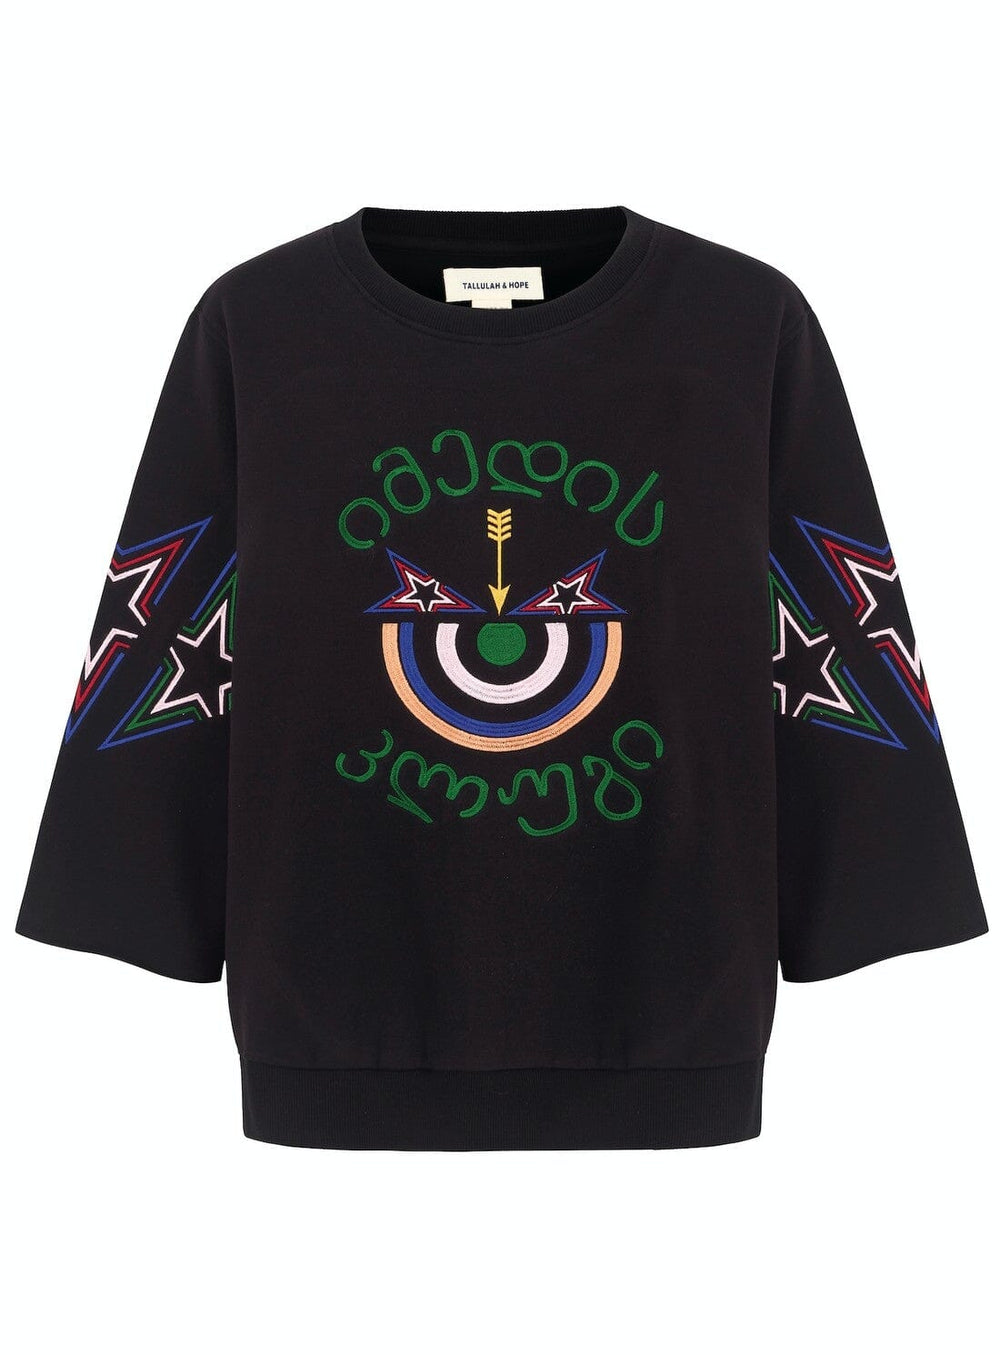 Cropped Sleeve Embroidered Black Sweatshirt Jumper YBDFinds 